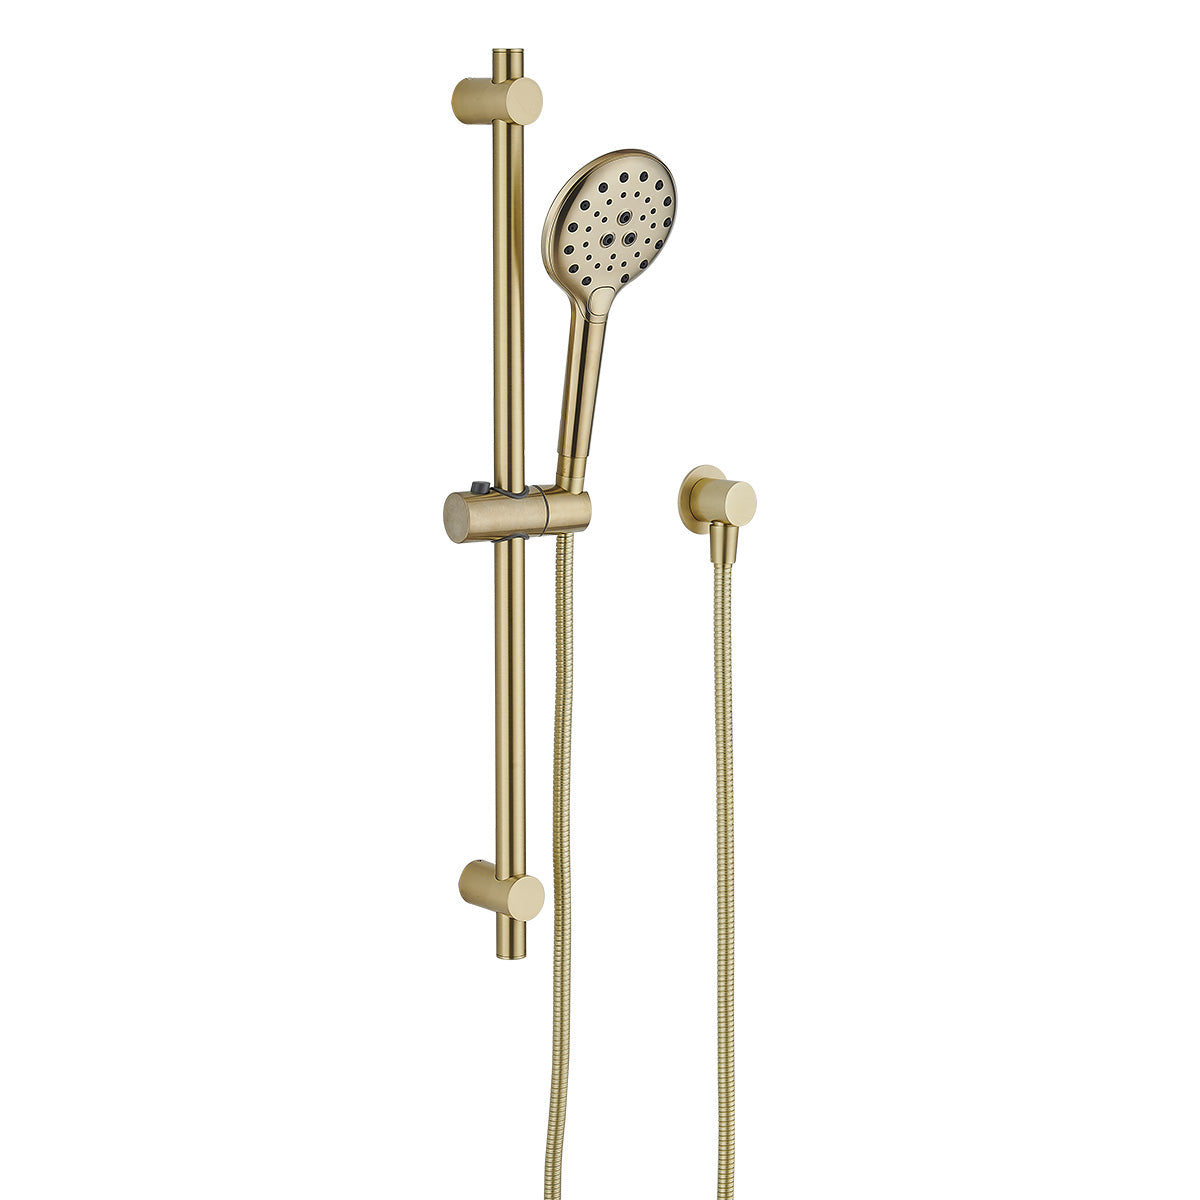 IDHSR1 (BG) / Ideal Hand Shower On Rail (Brushed Gold) - Hellycar Brushed Gold Handheld Shower With Rail